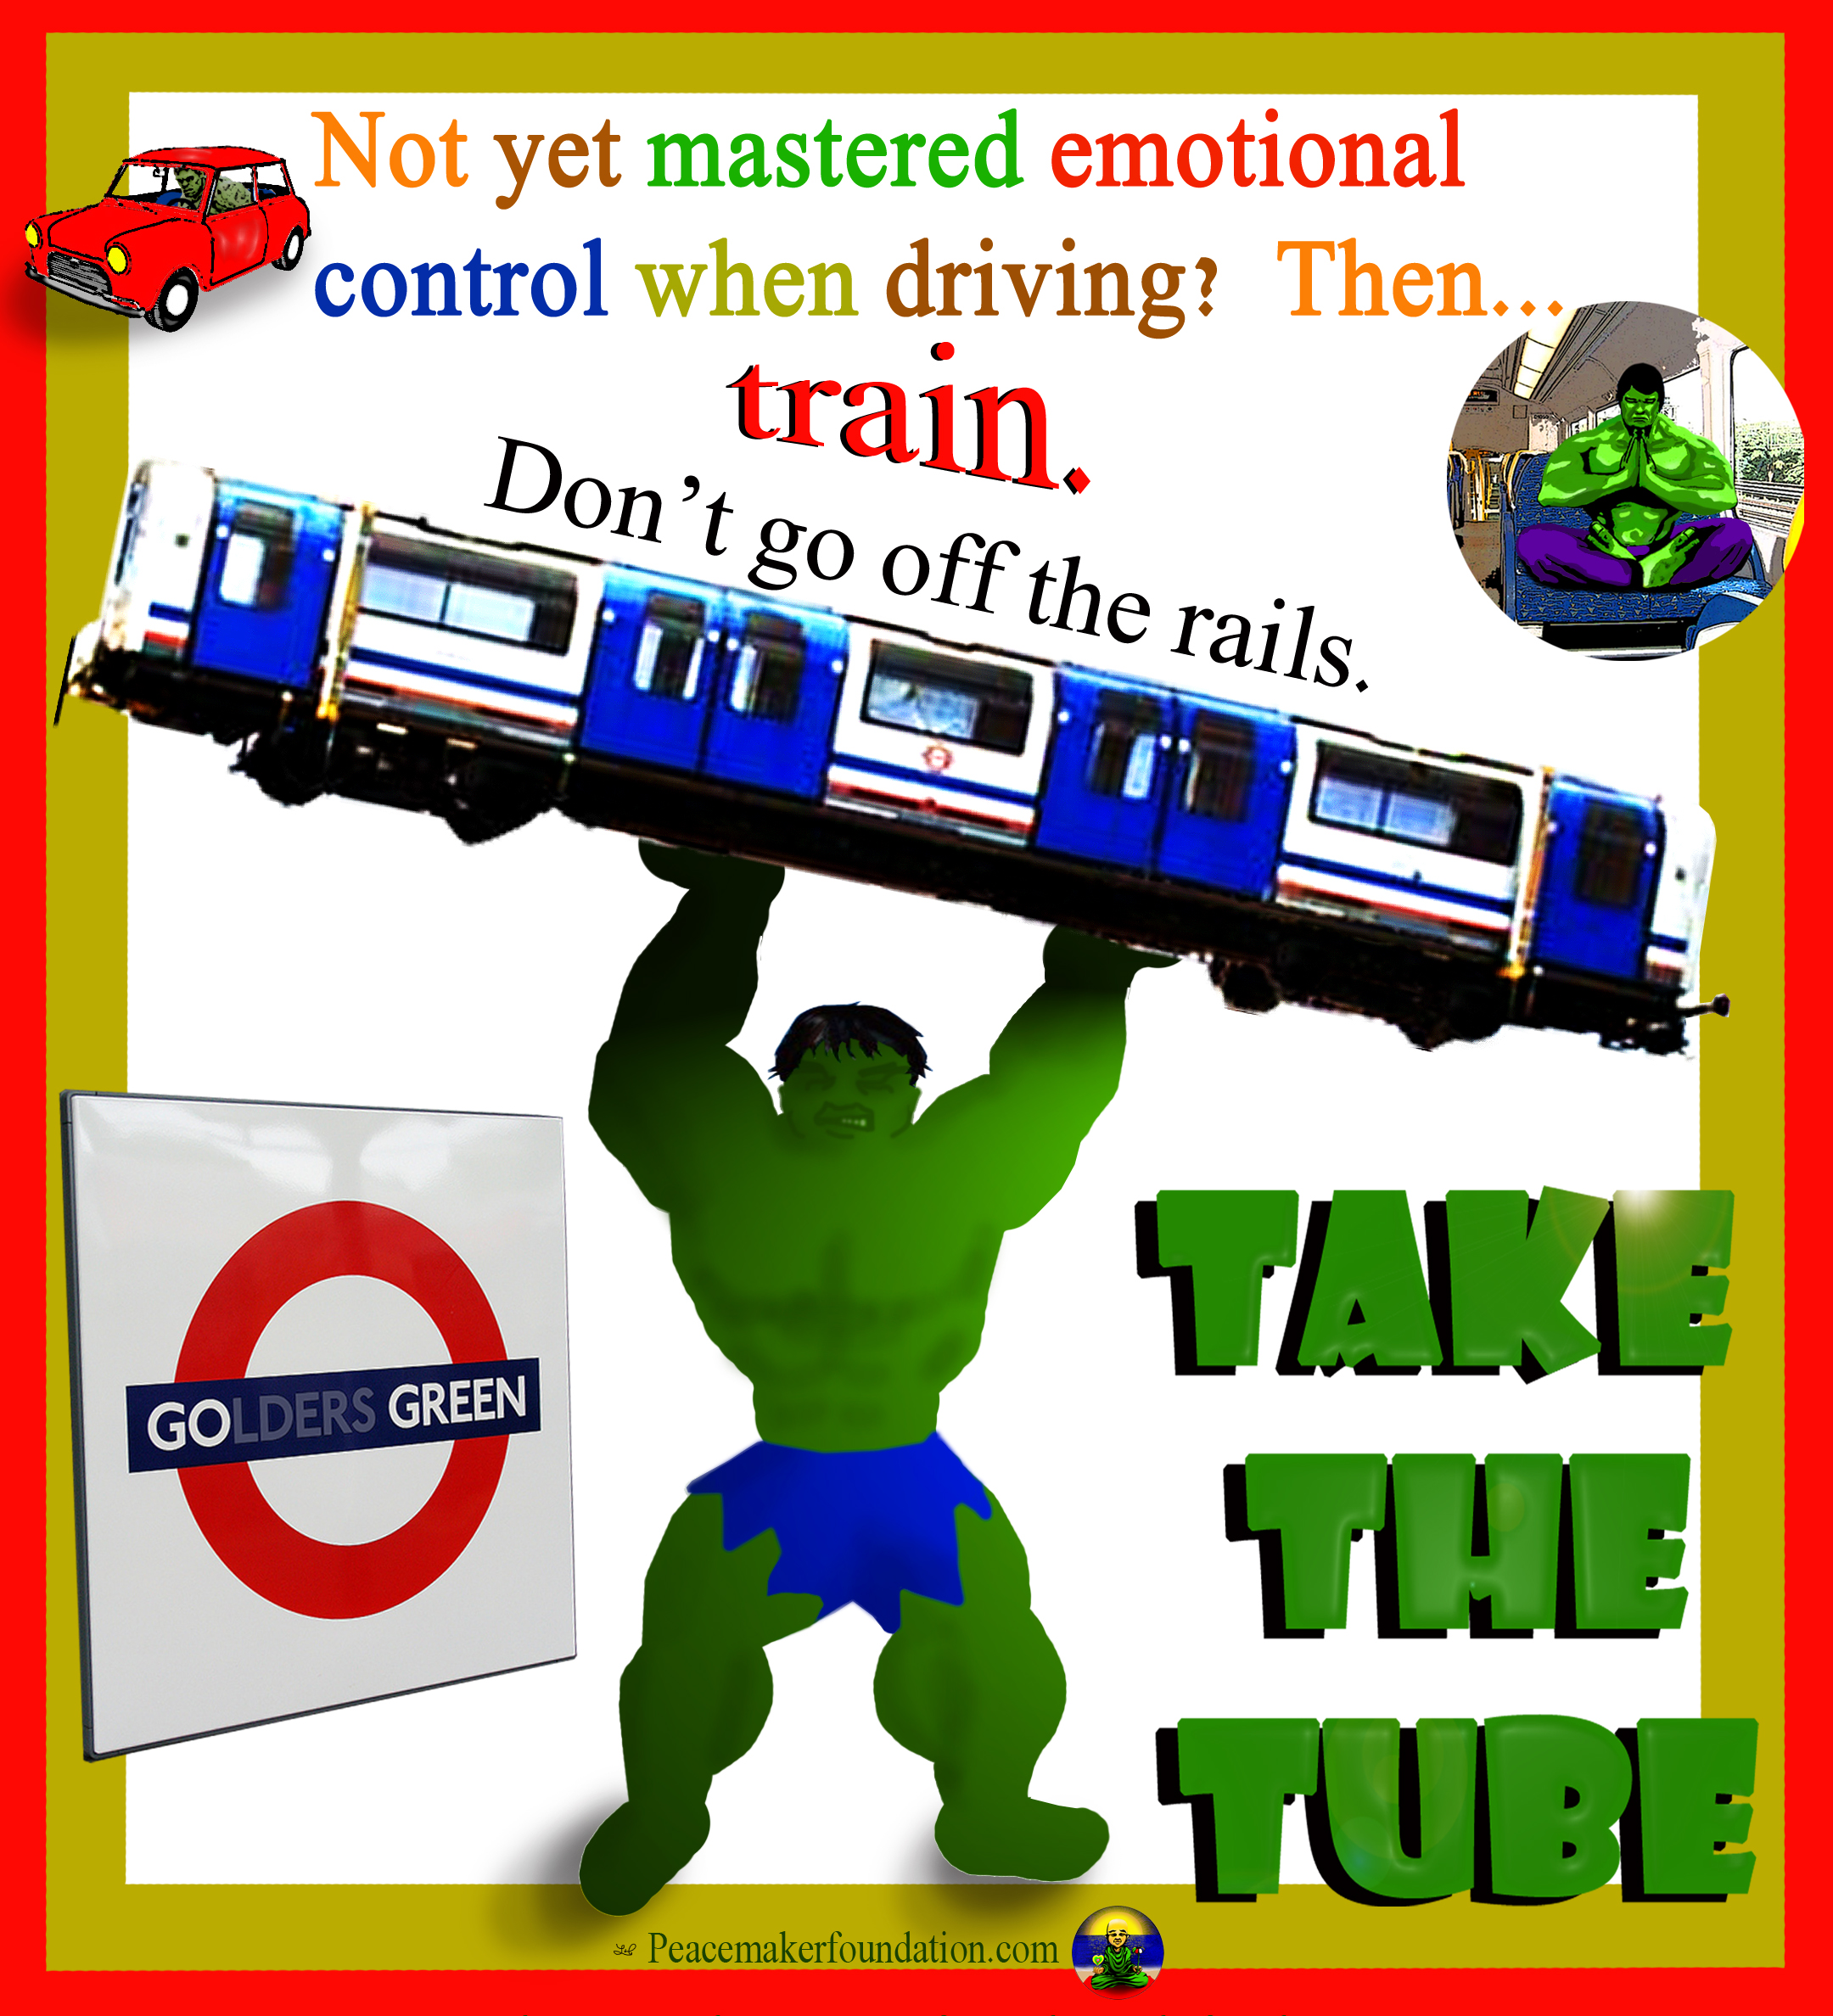 Go Green Take the Tube (For London), train, 